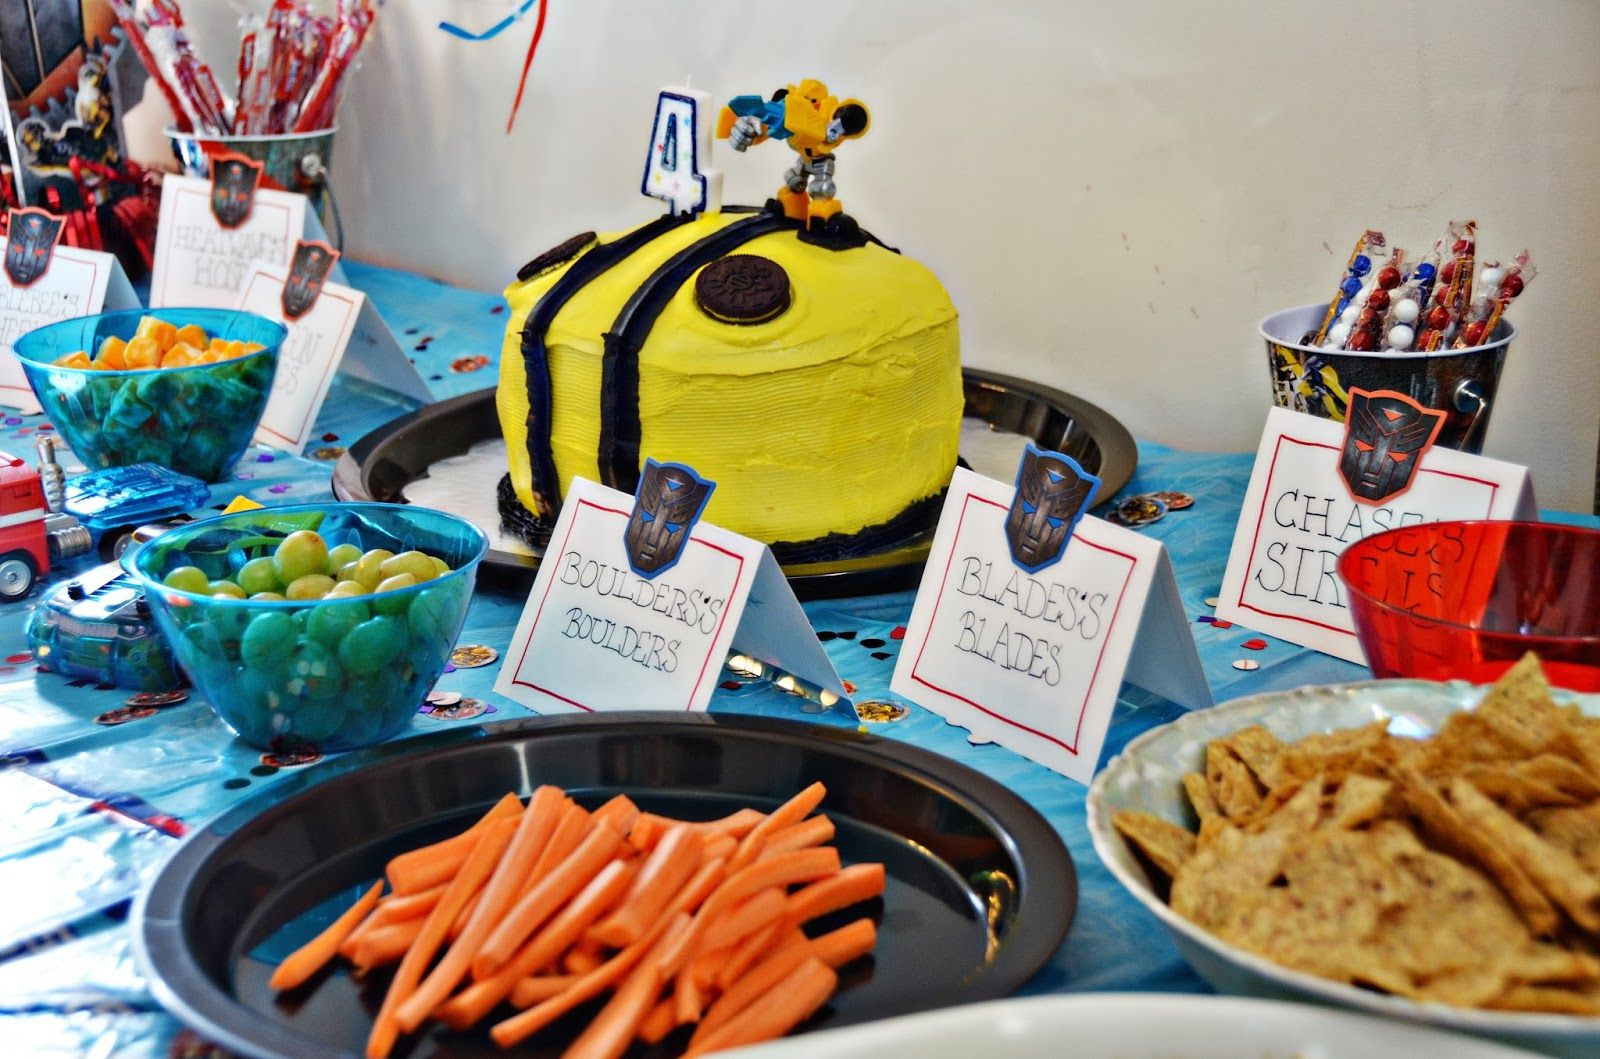 Rescue Bots Birthday Party Supplies
 Rescue Bot Birthday Party Ideas